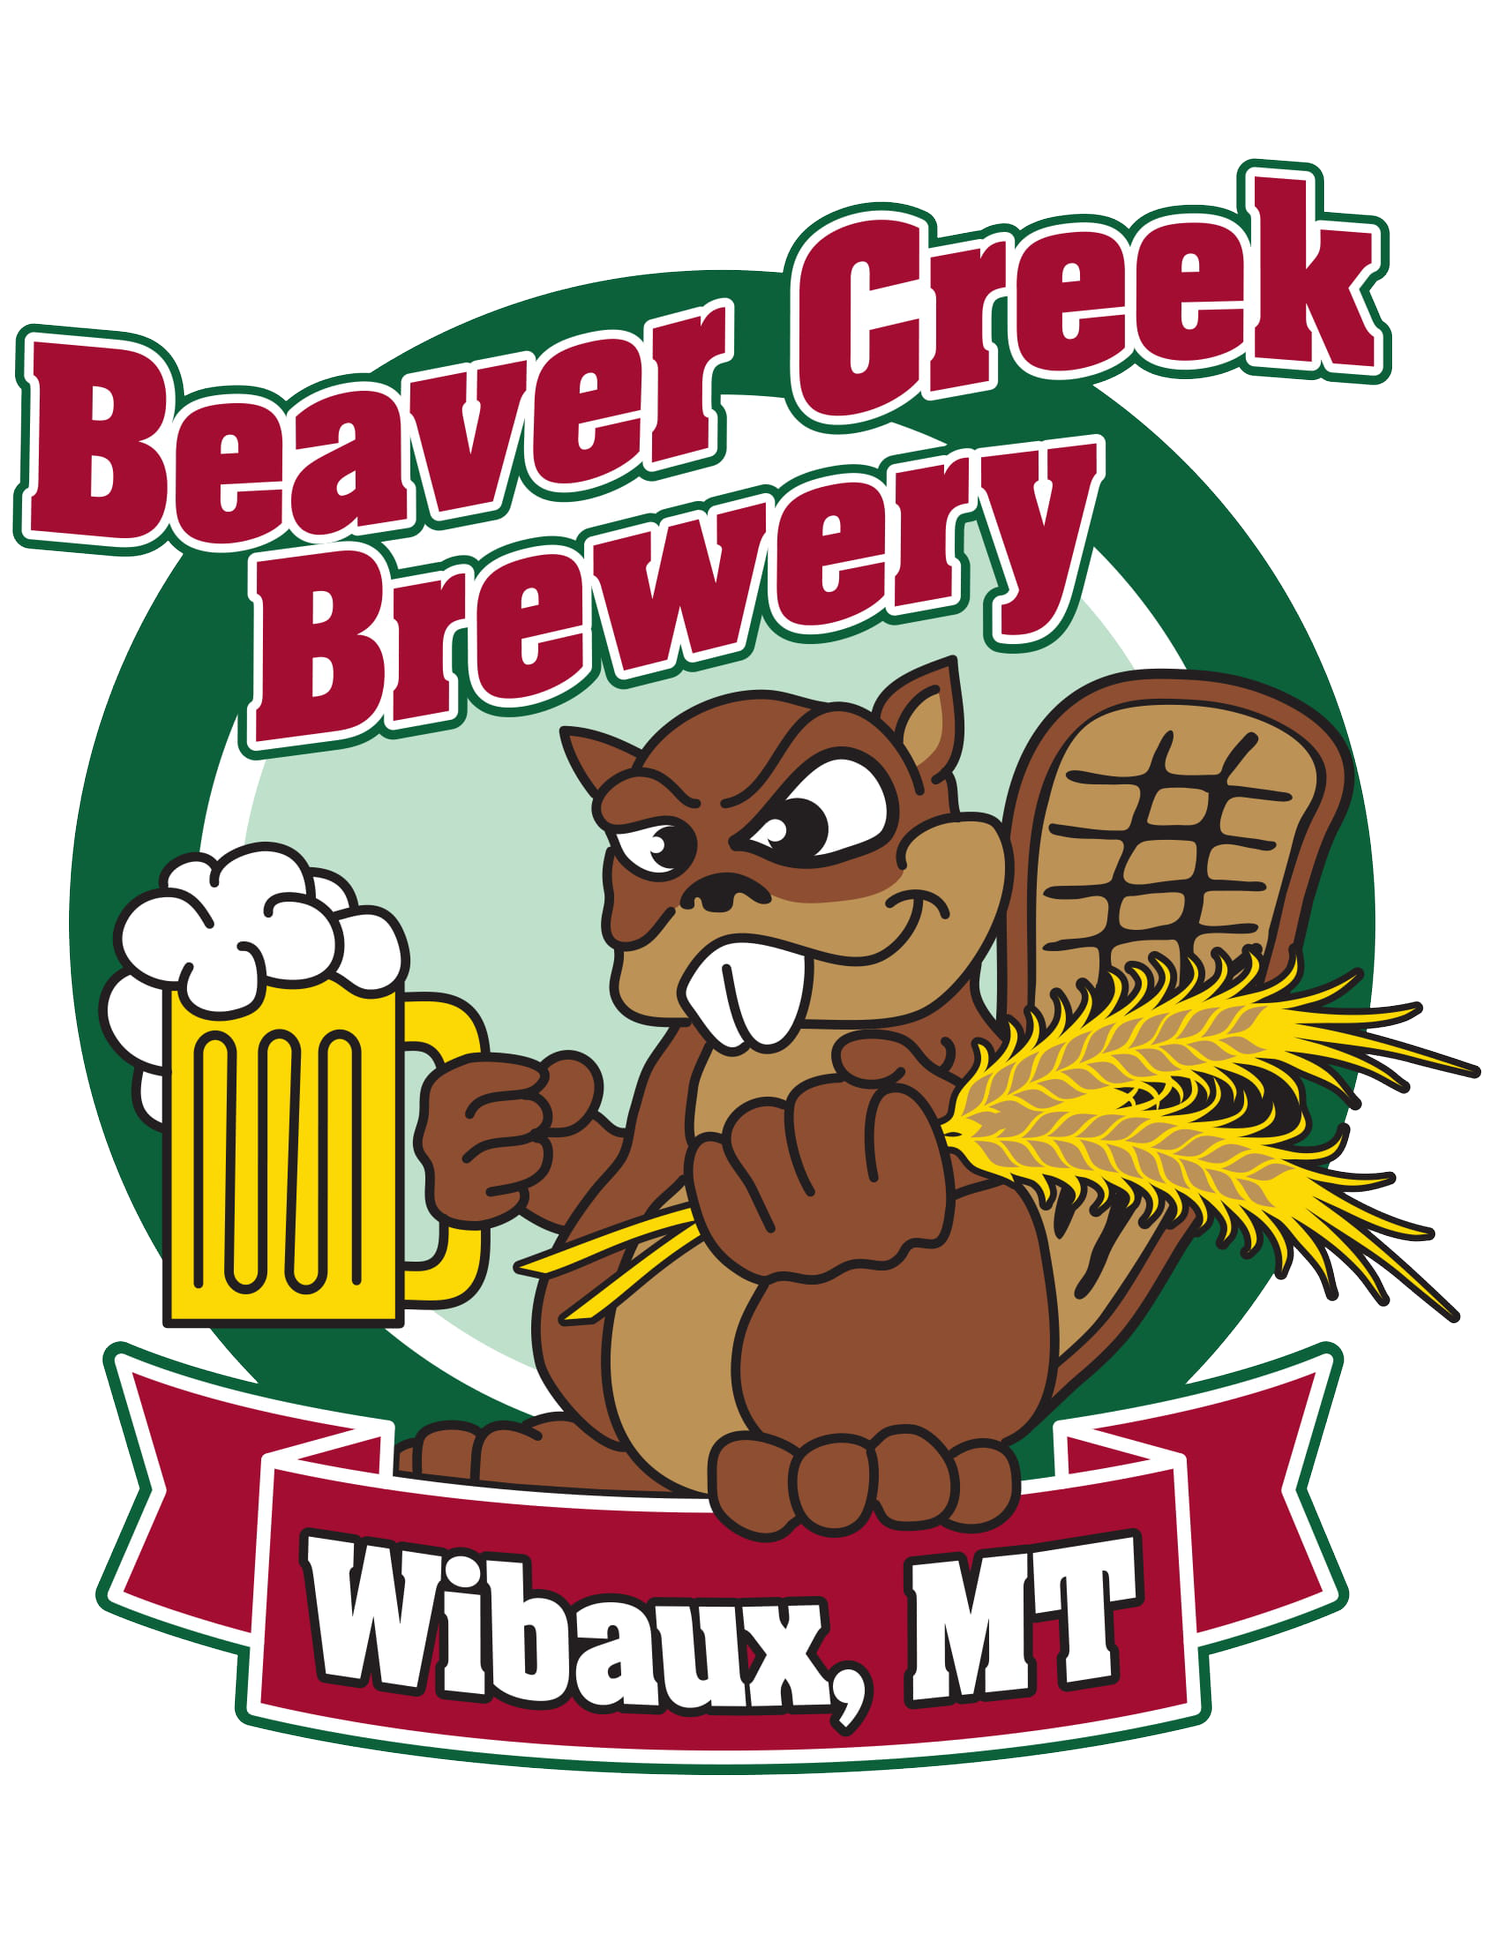 Beaver Creek Brewery - Wibaux, MT